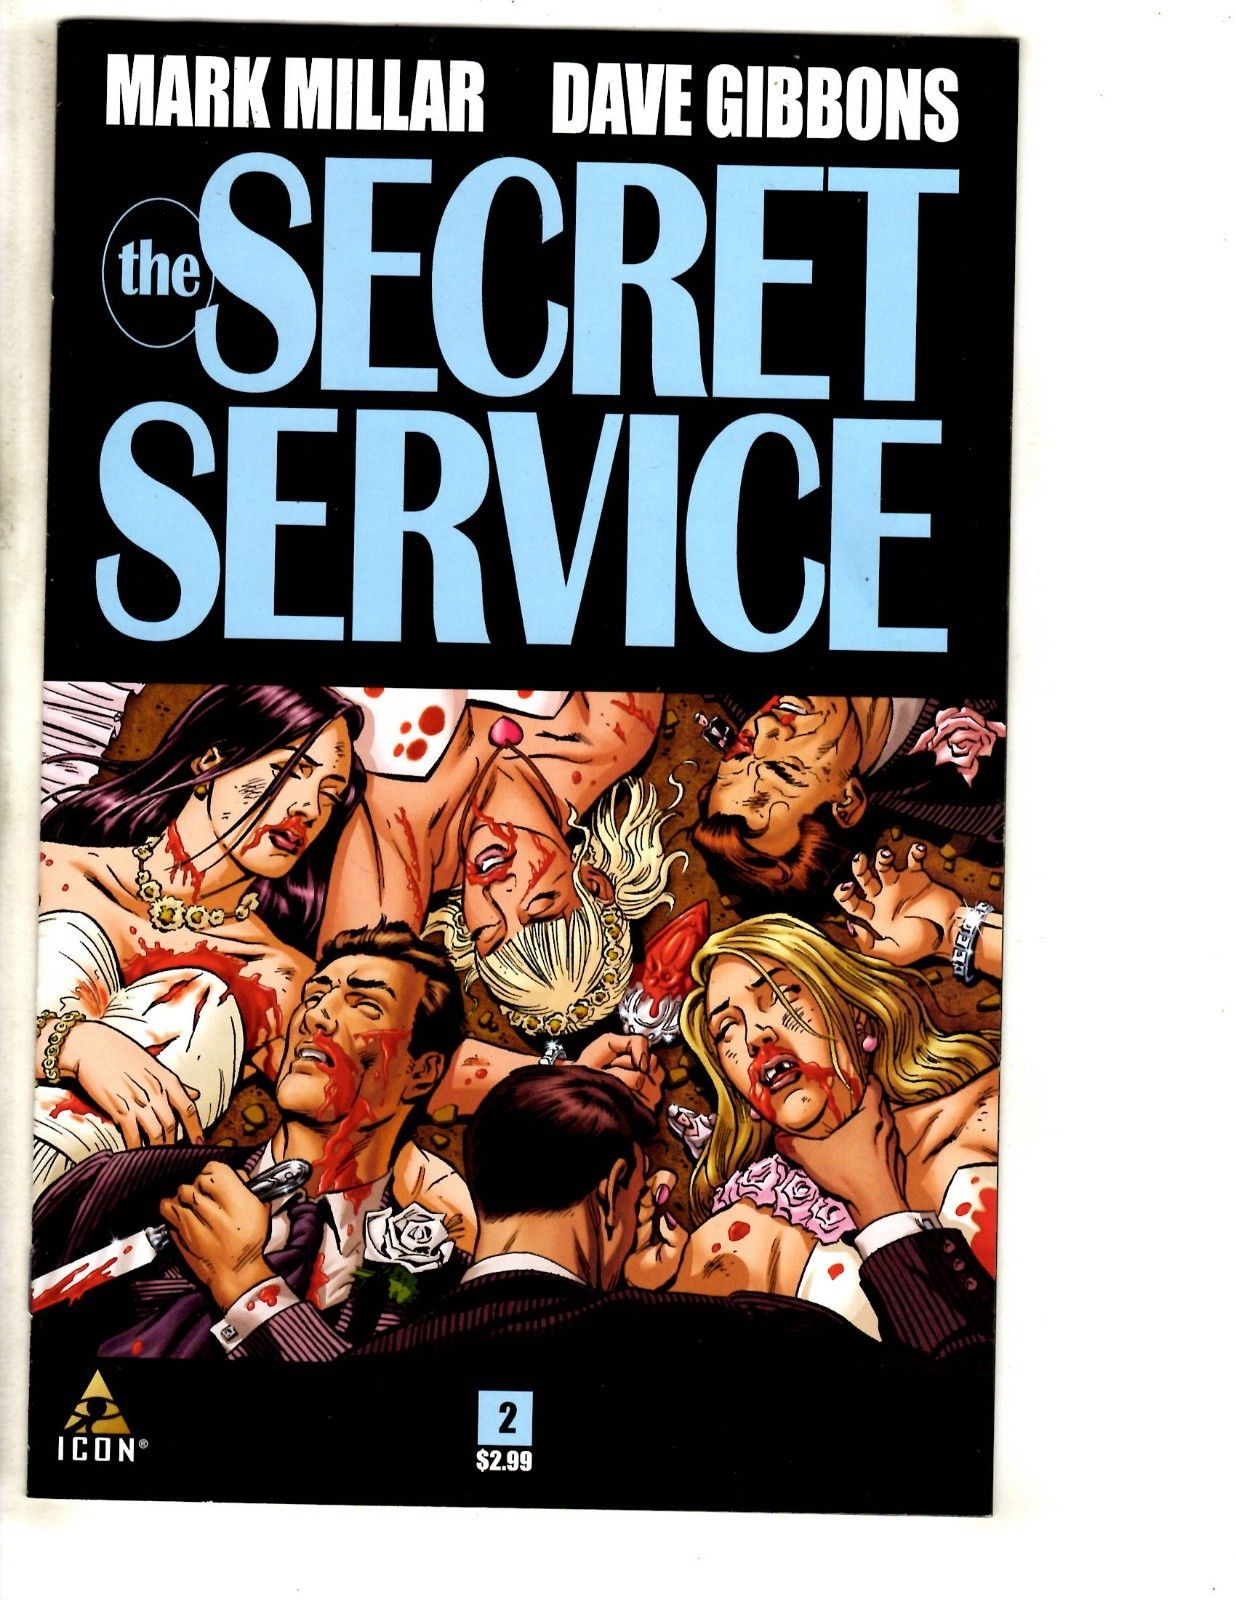 The Secret Service: Kingsman by Mark Millar